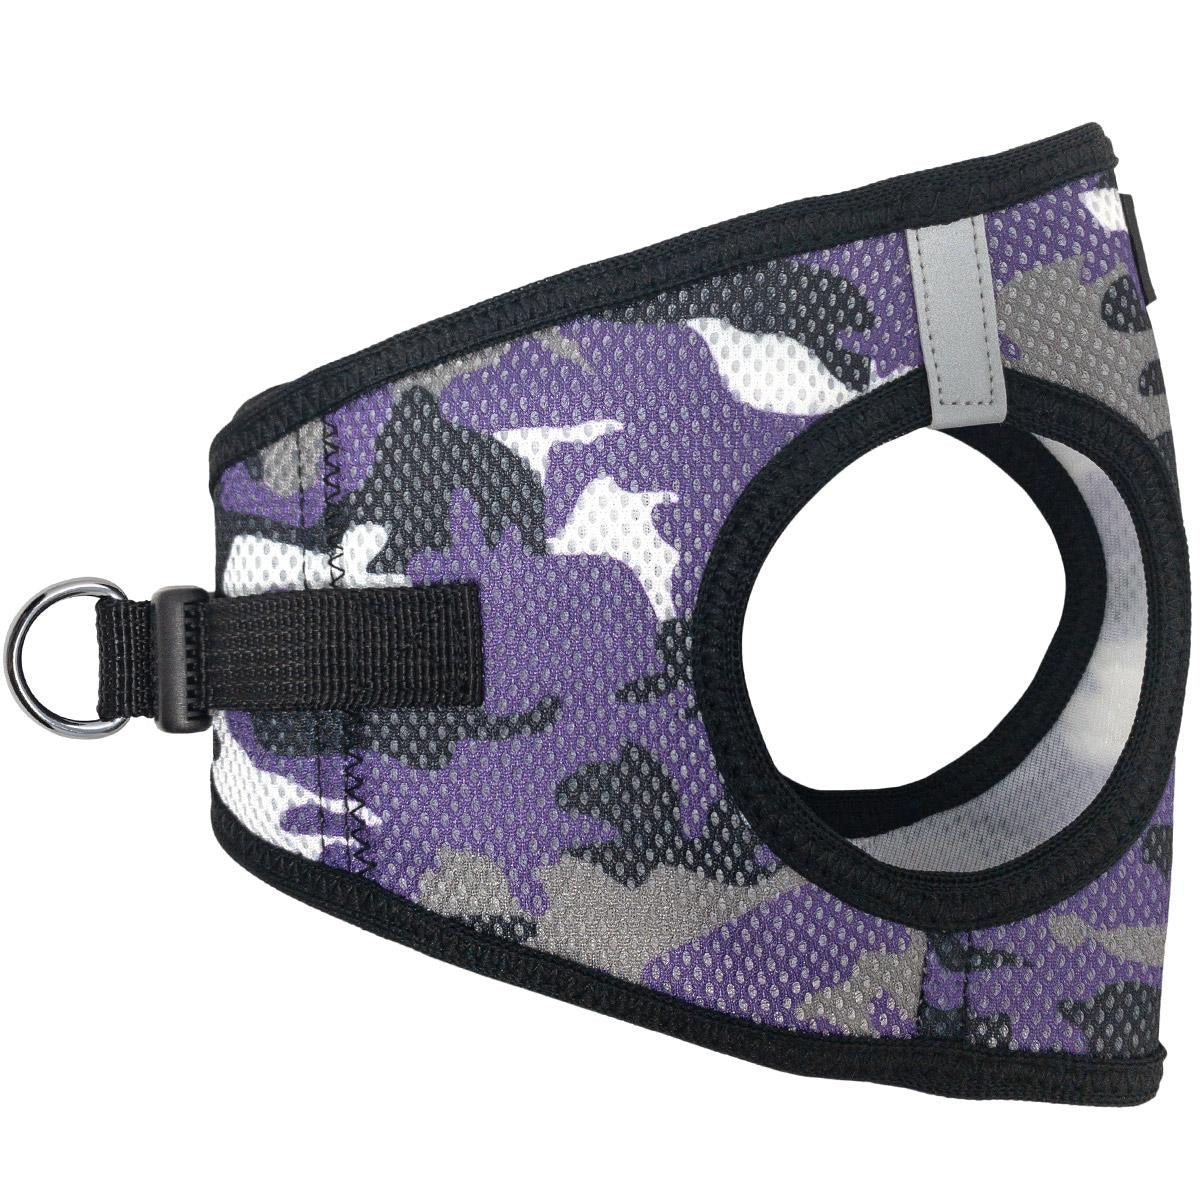 American River Choke Free Dog Harness Camouflage Collection - Purple Camo